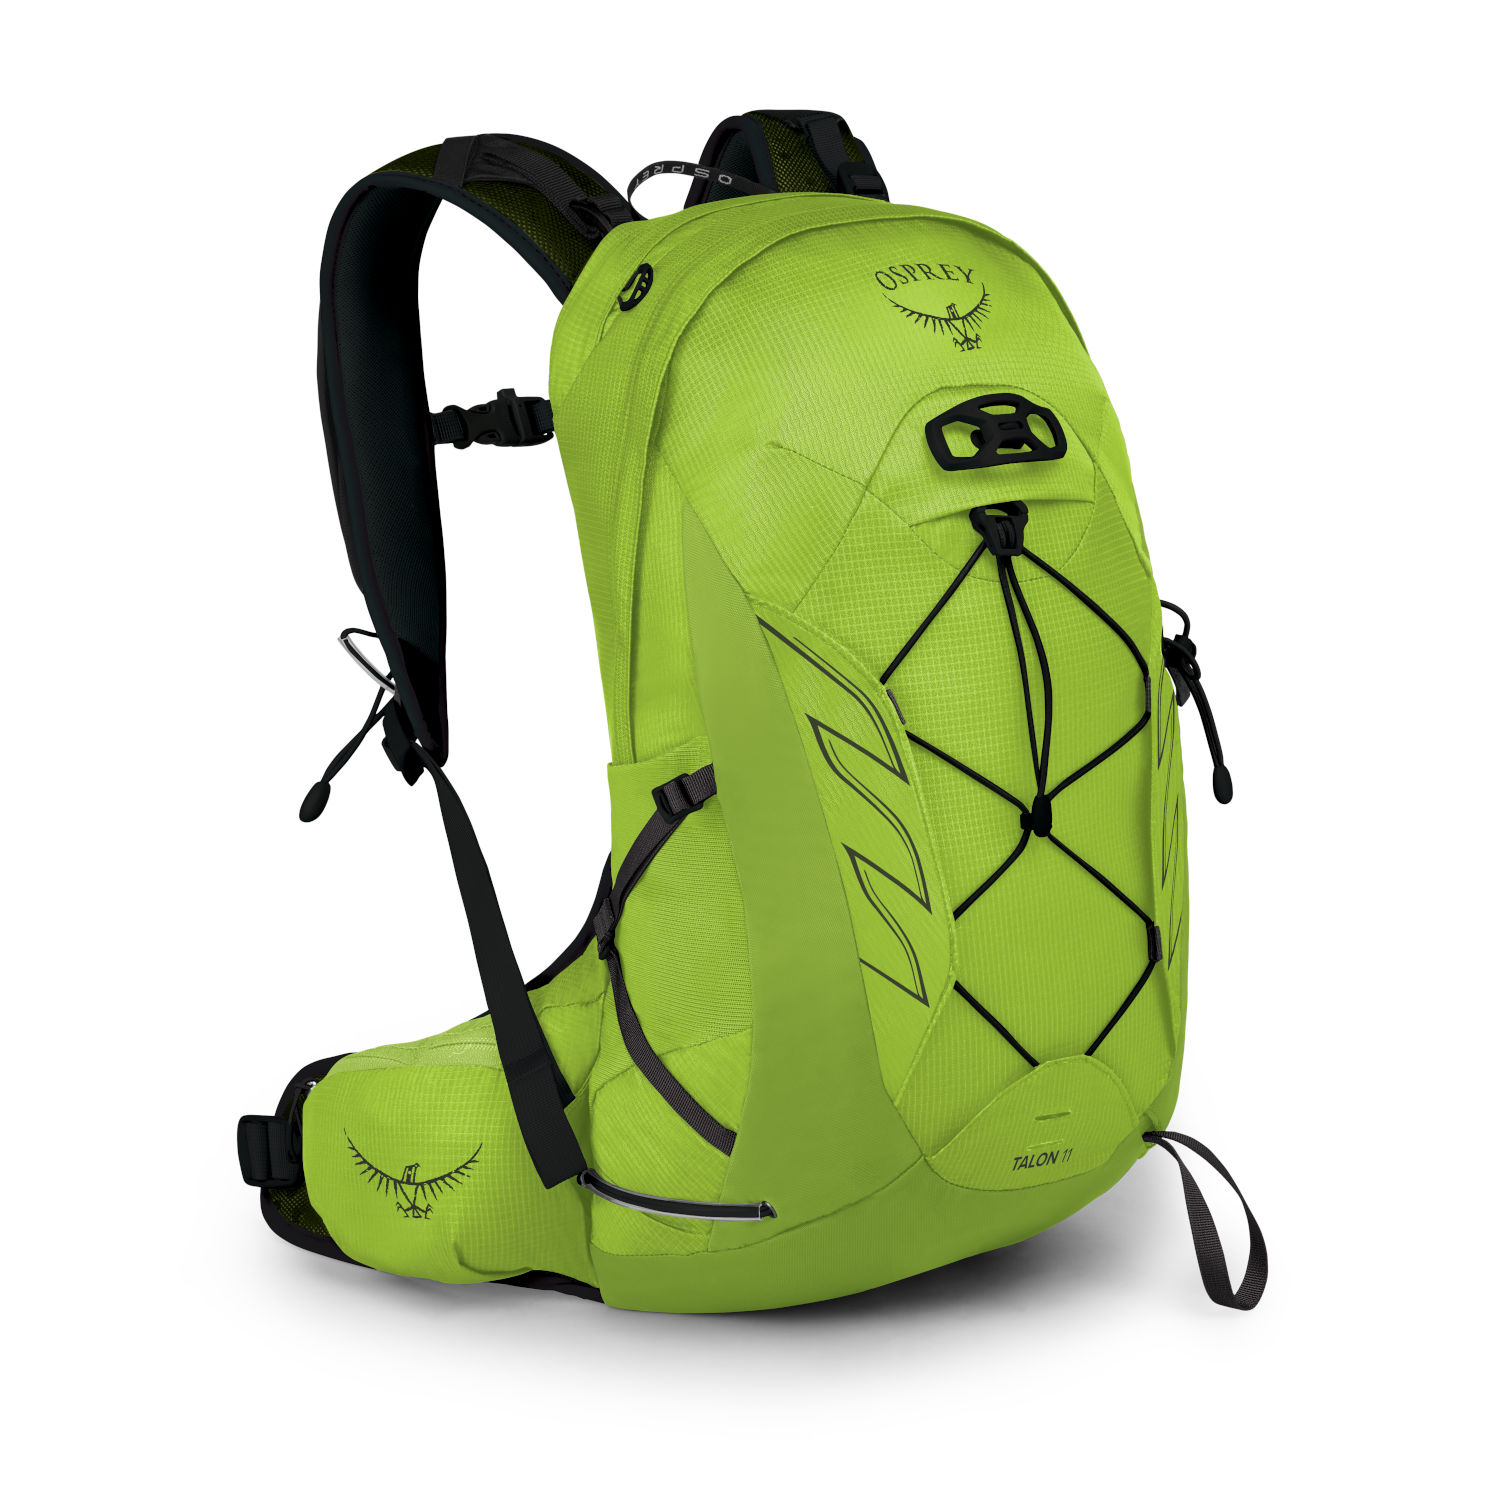 Productfoto van Osprey Talon 11 Backpack - Limon Green